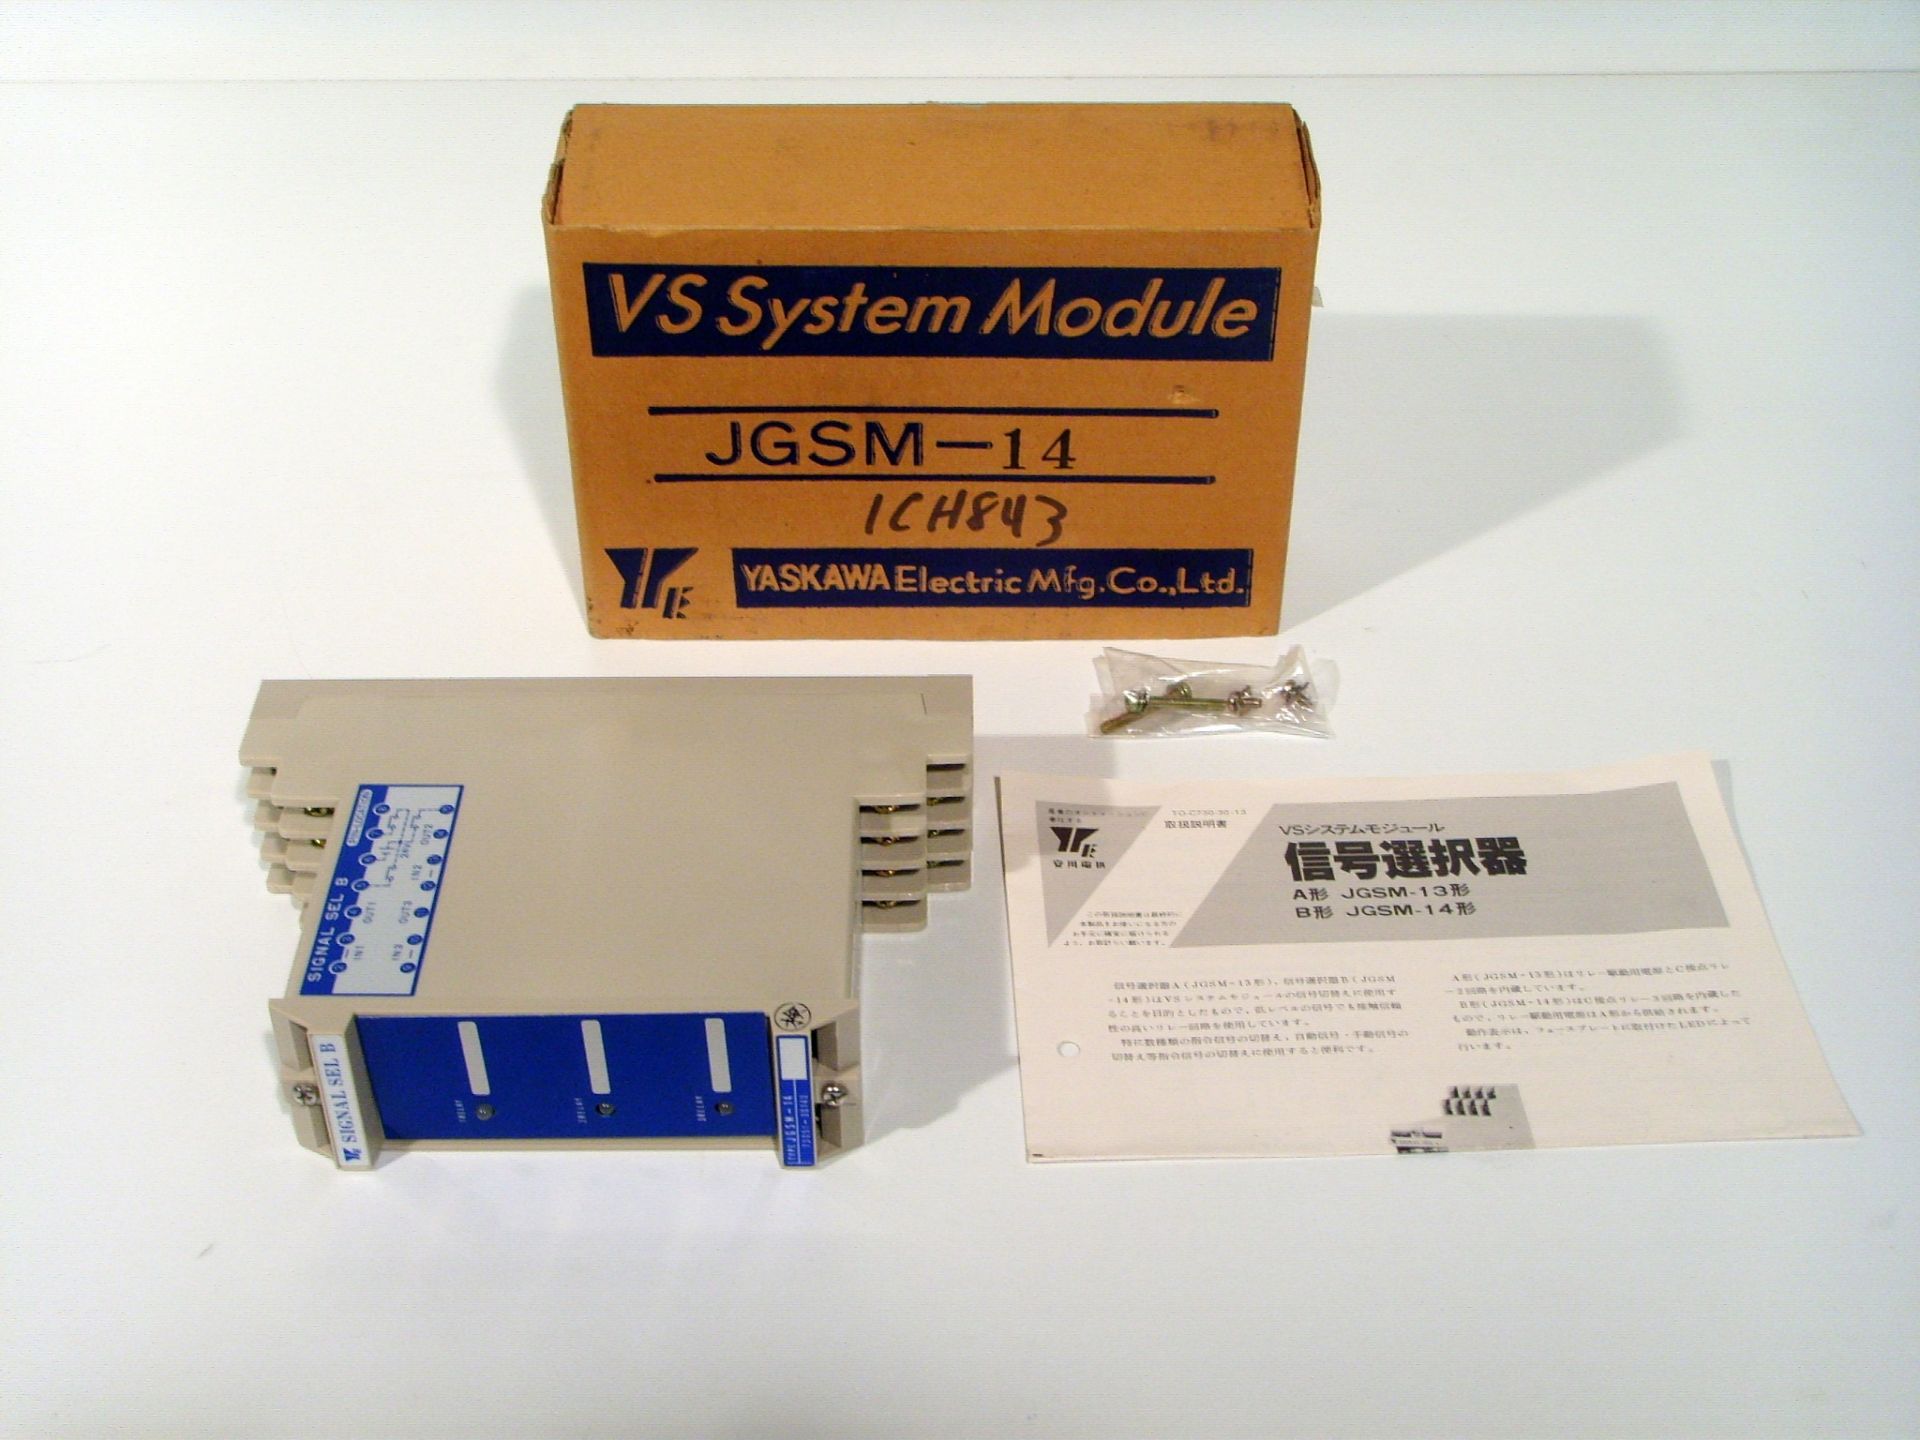 Yaskawa JGSM-14 VS System Module